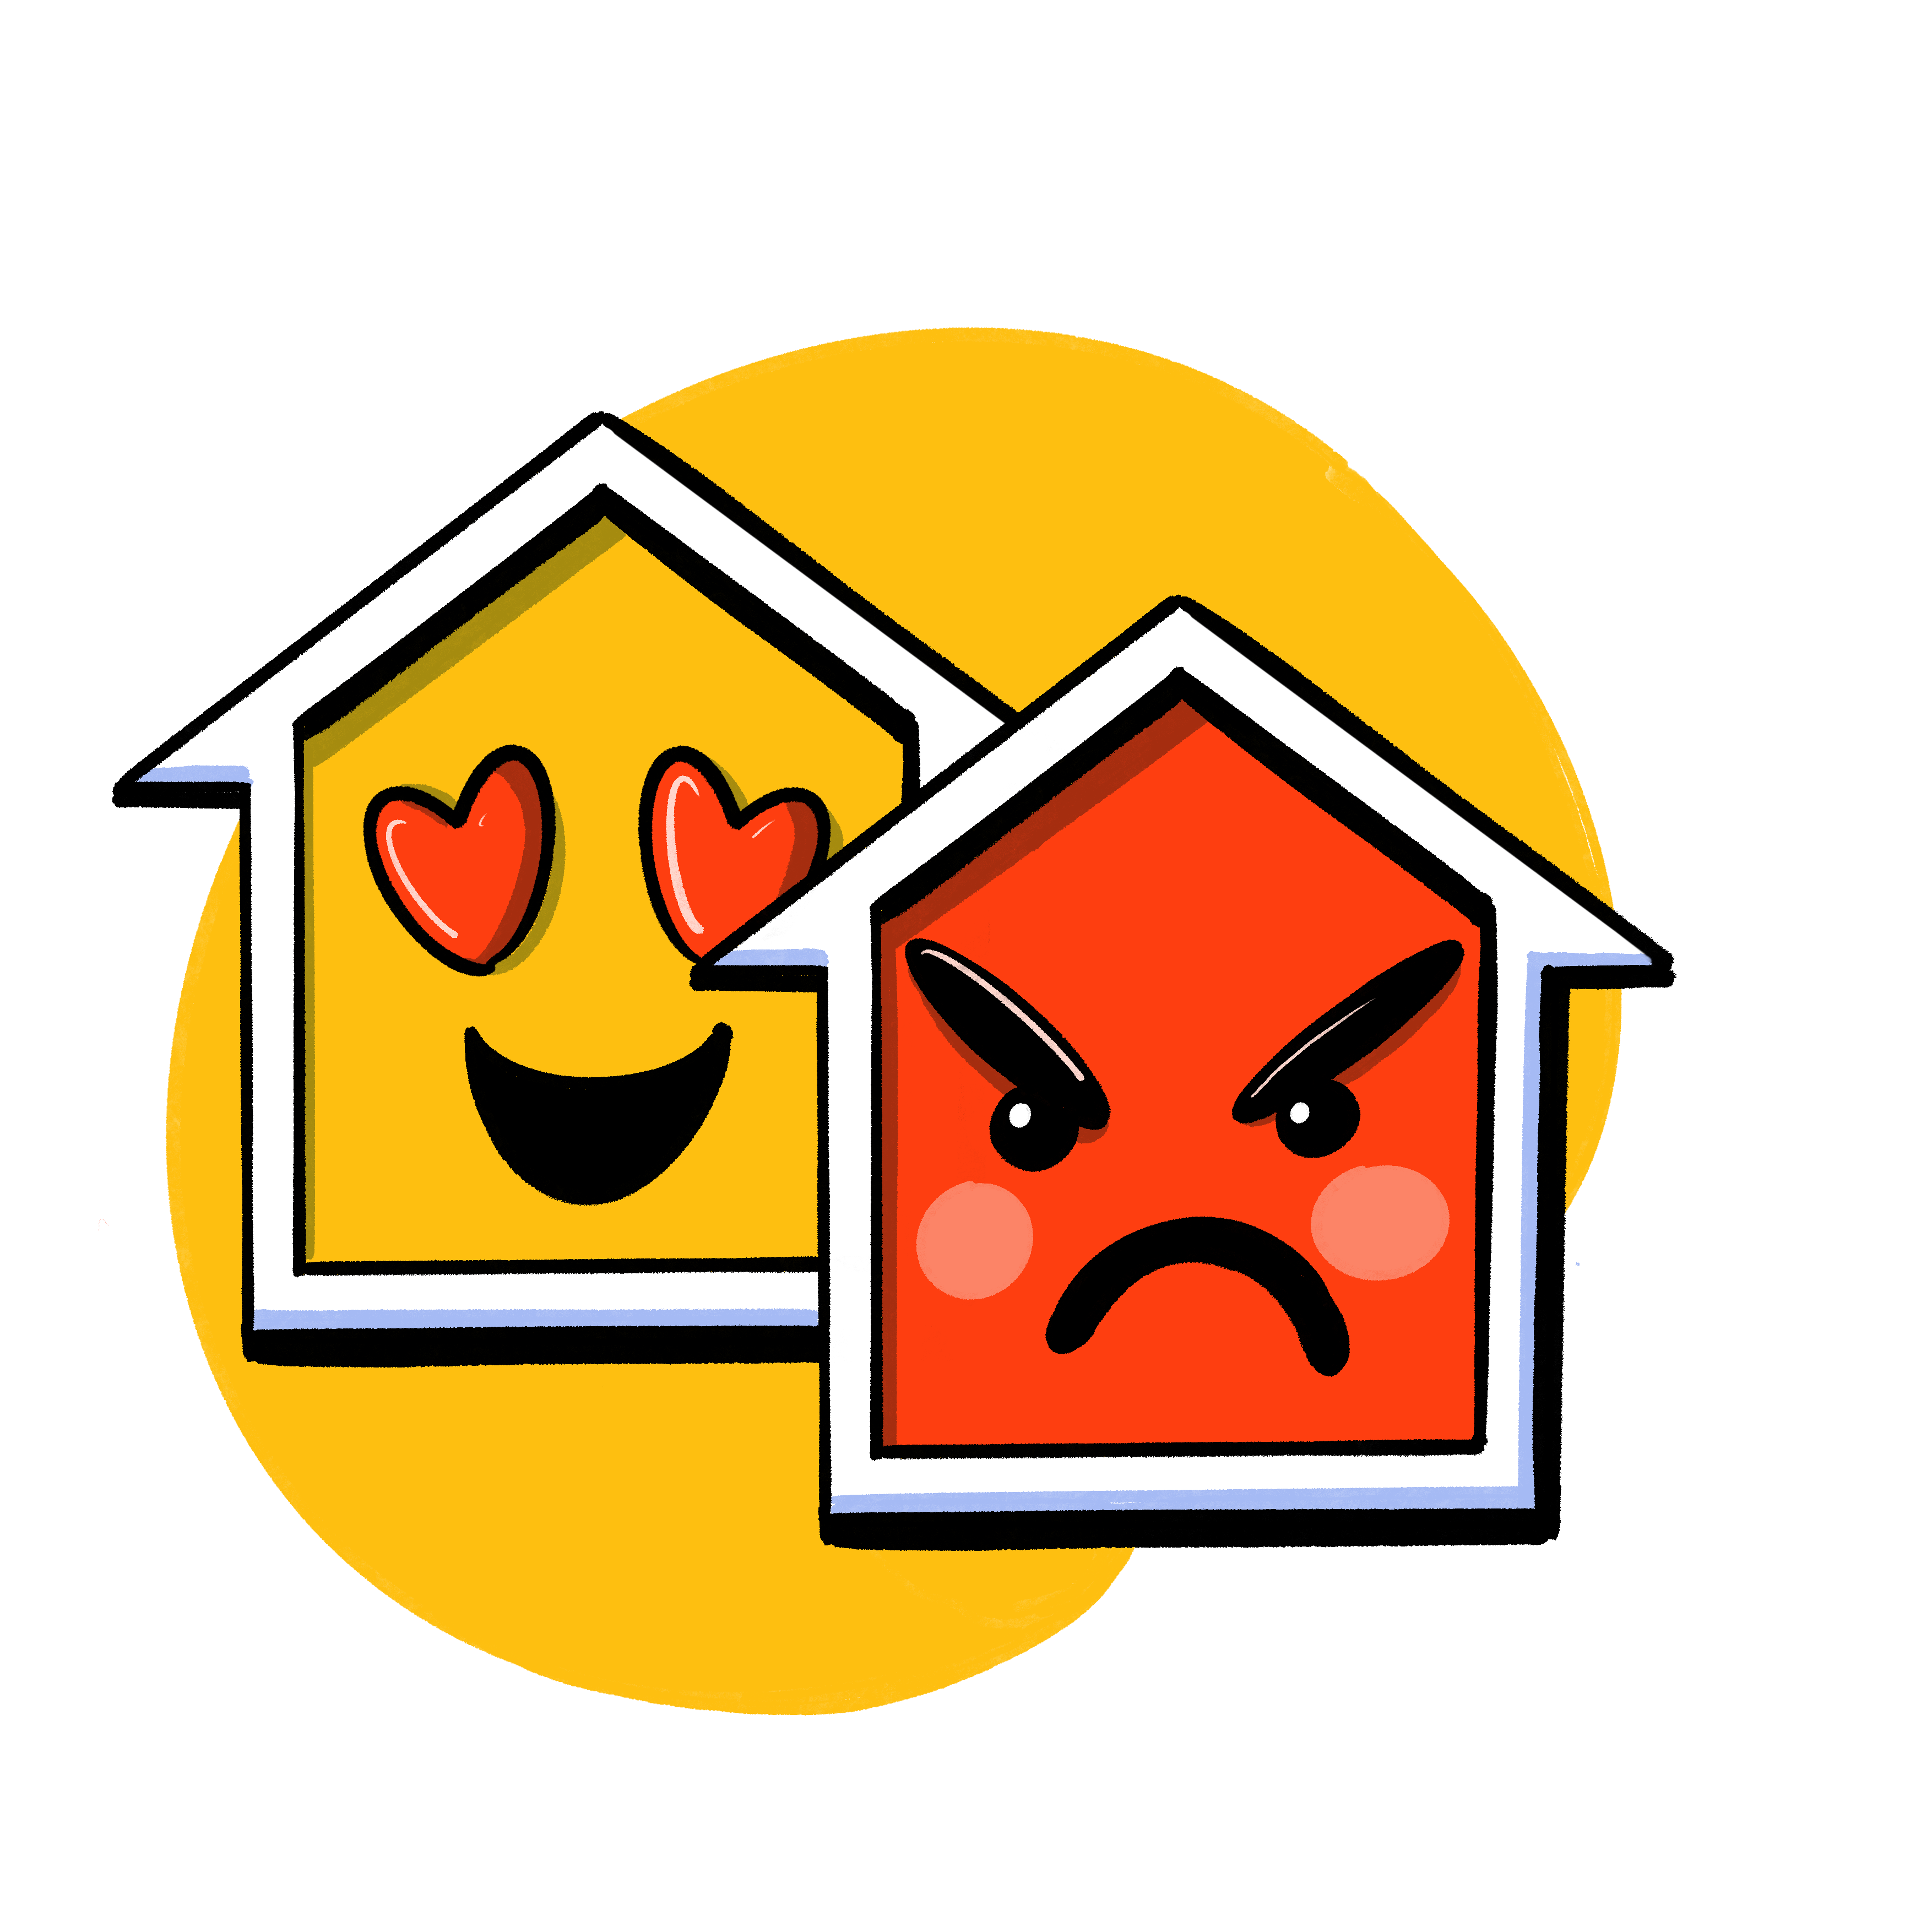 Happy house and sad house